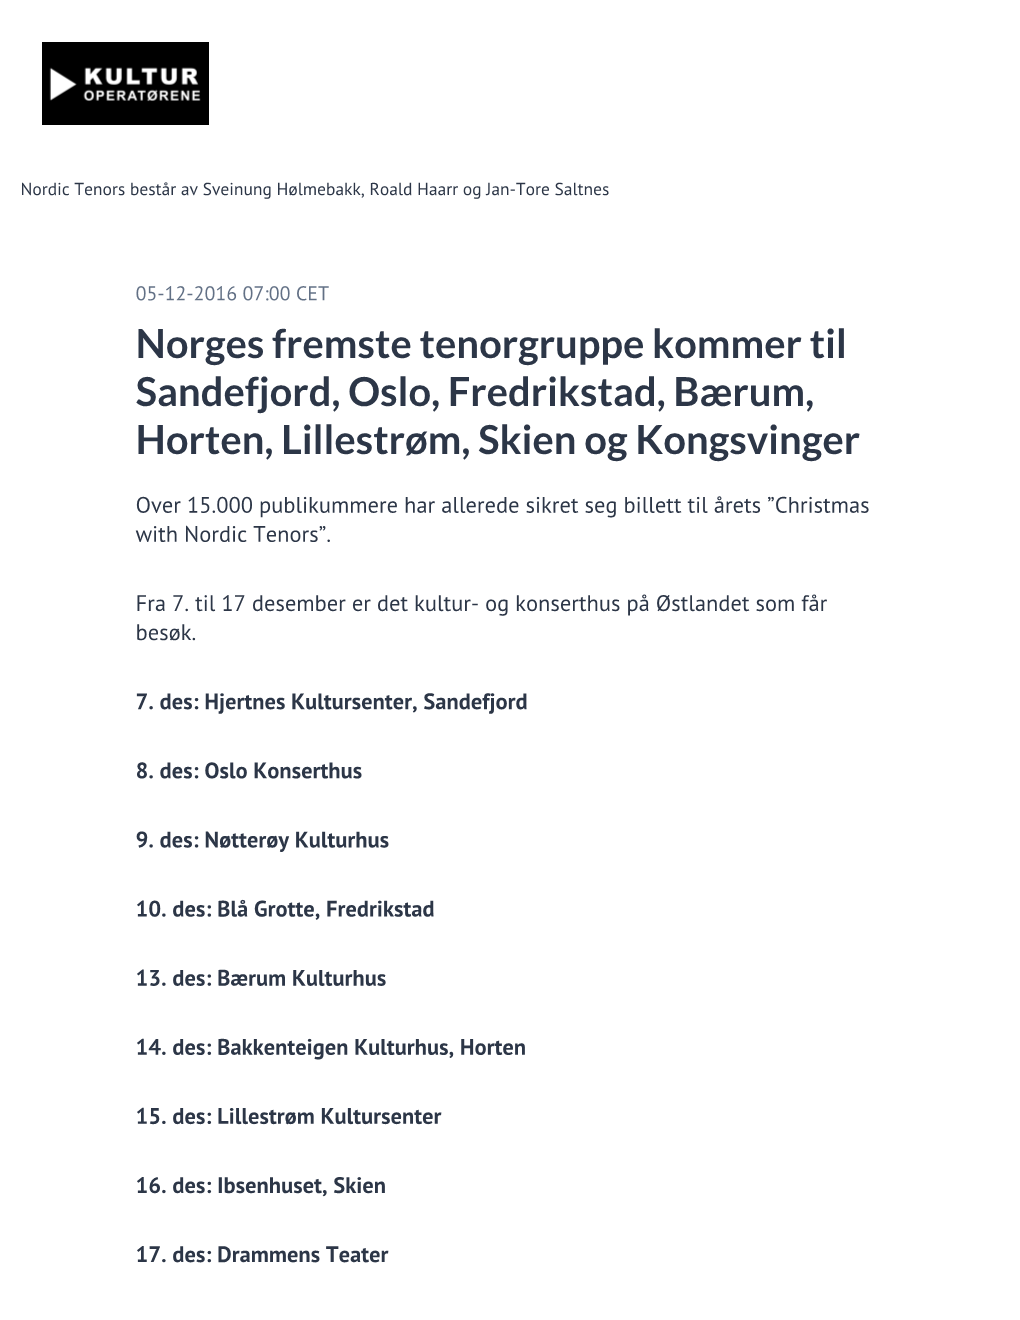 Norges Fremste Tenorgruppe Kommer Til Sandefjord, Oslo, Fredrikstad, Bærum, Horten, Lillestrøm, Skien Og Kongsvinger